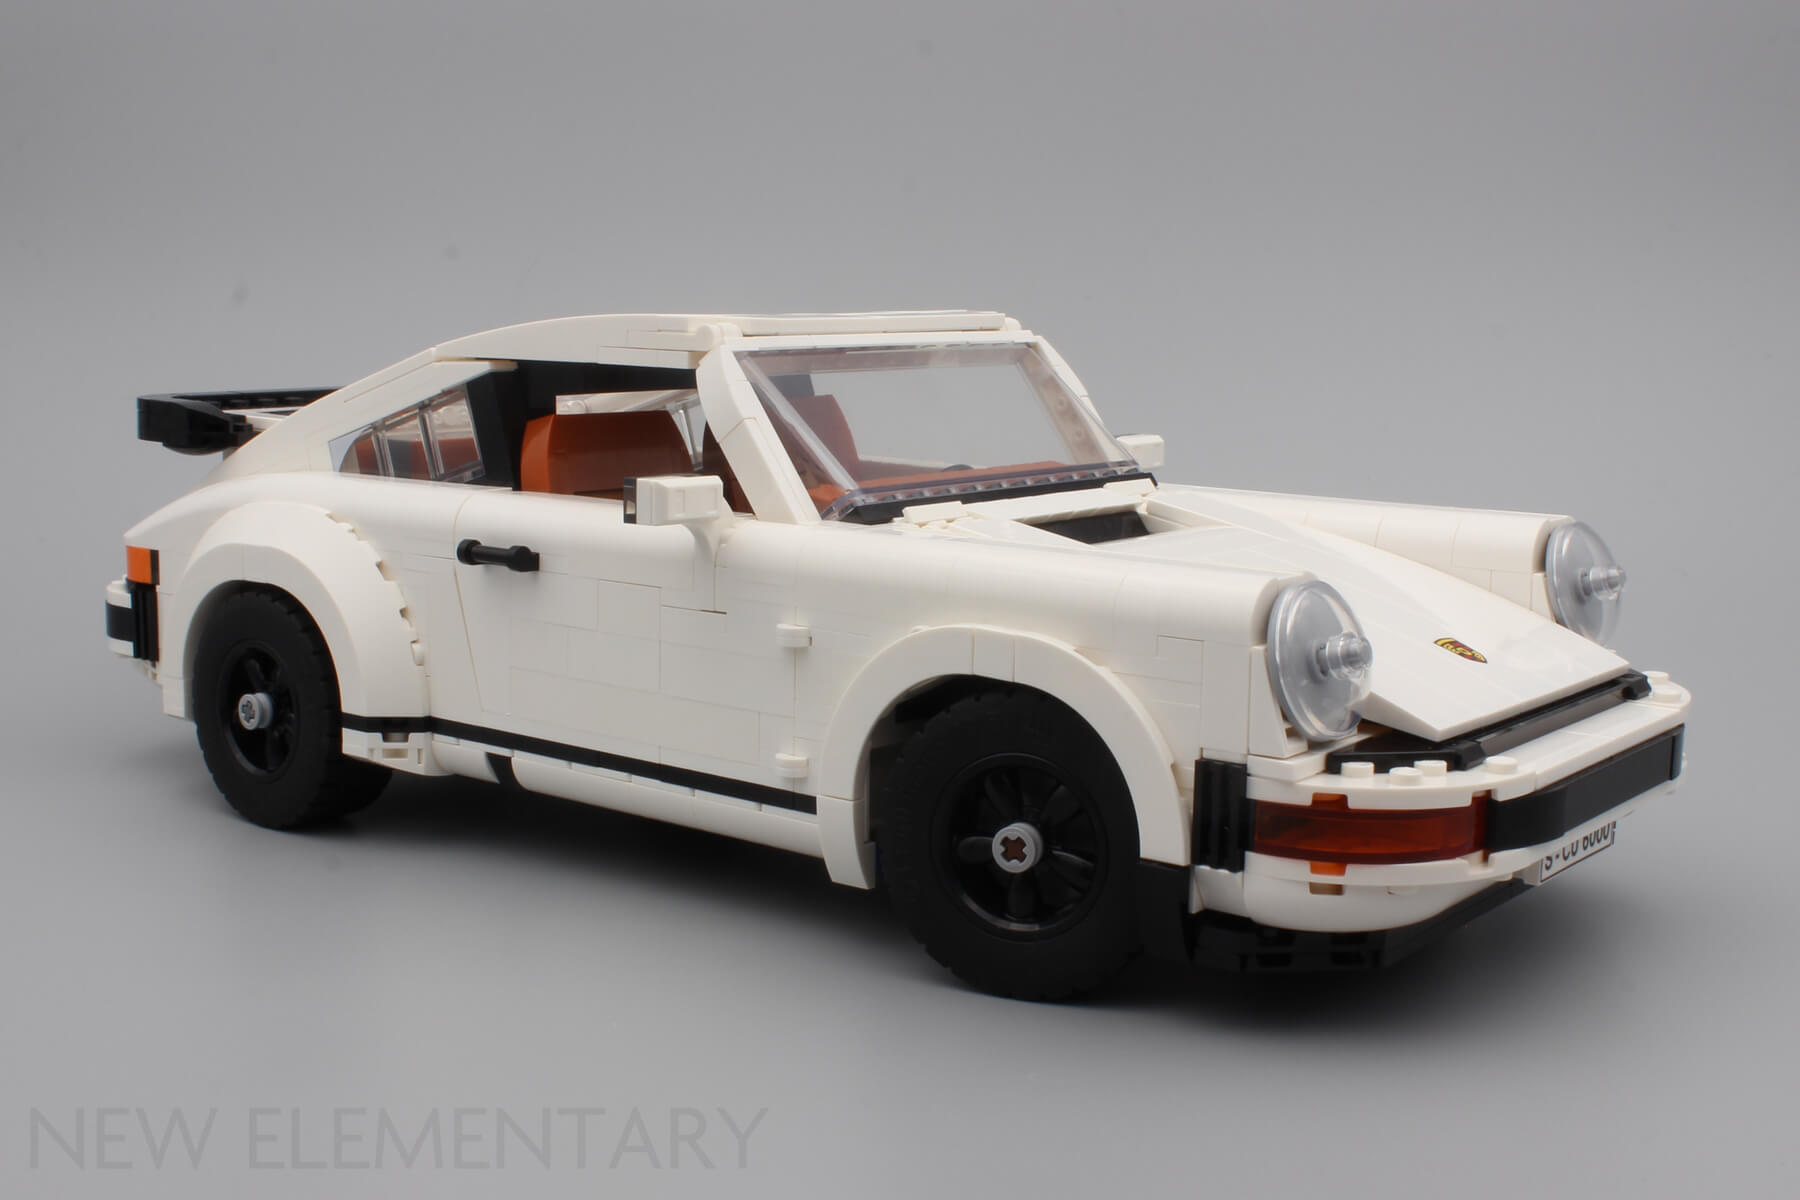 You can buy this Lego Creator Expert Porsche 911 online